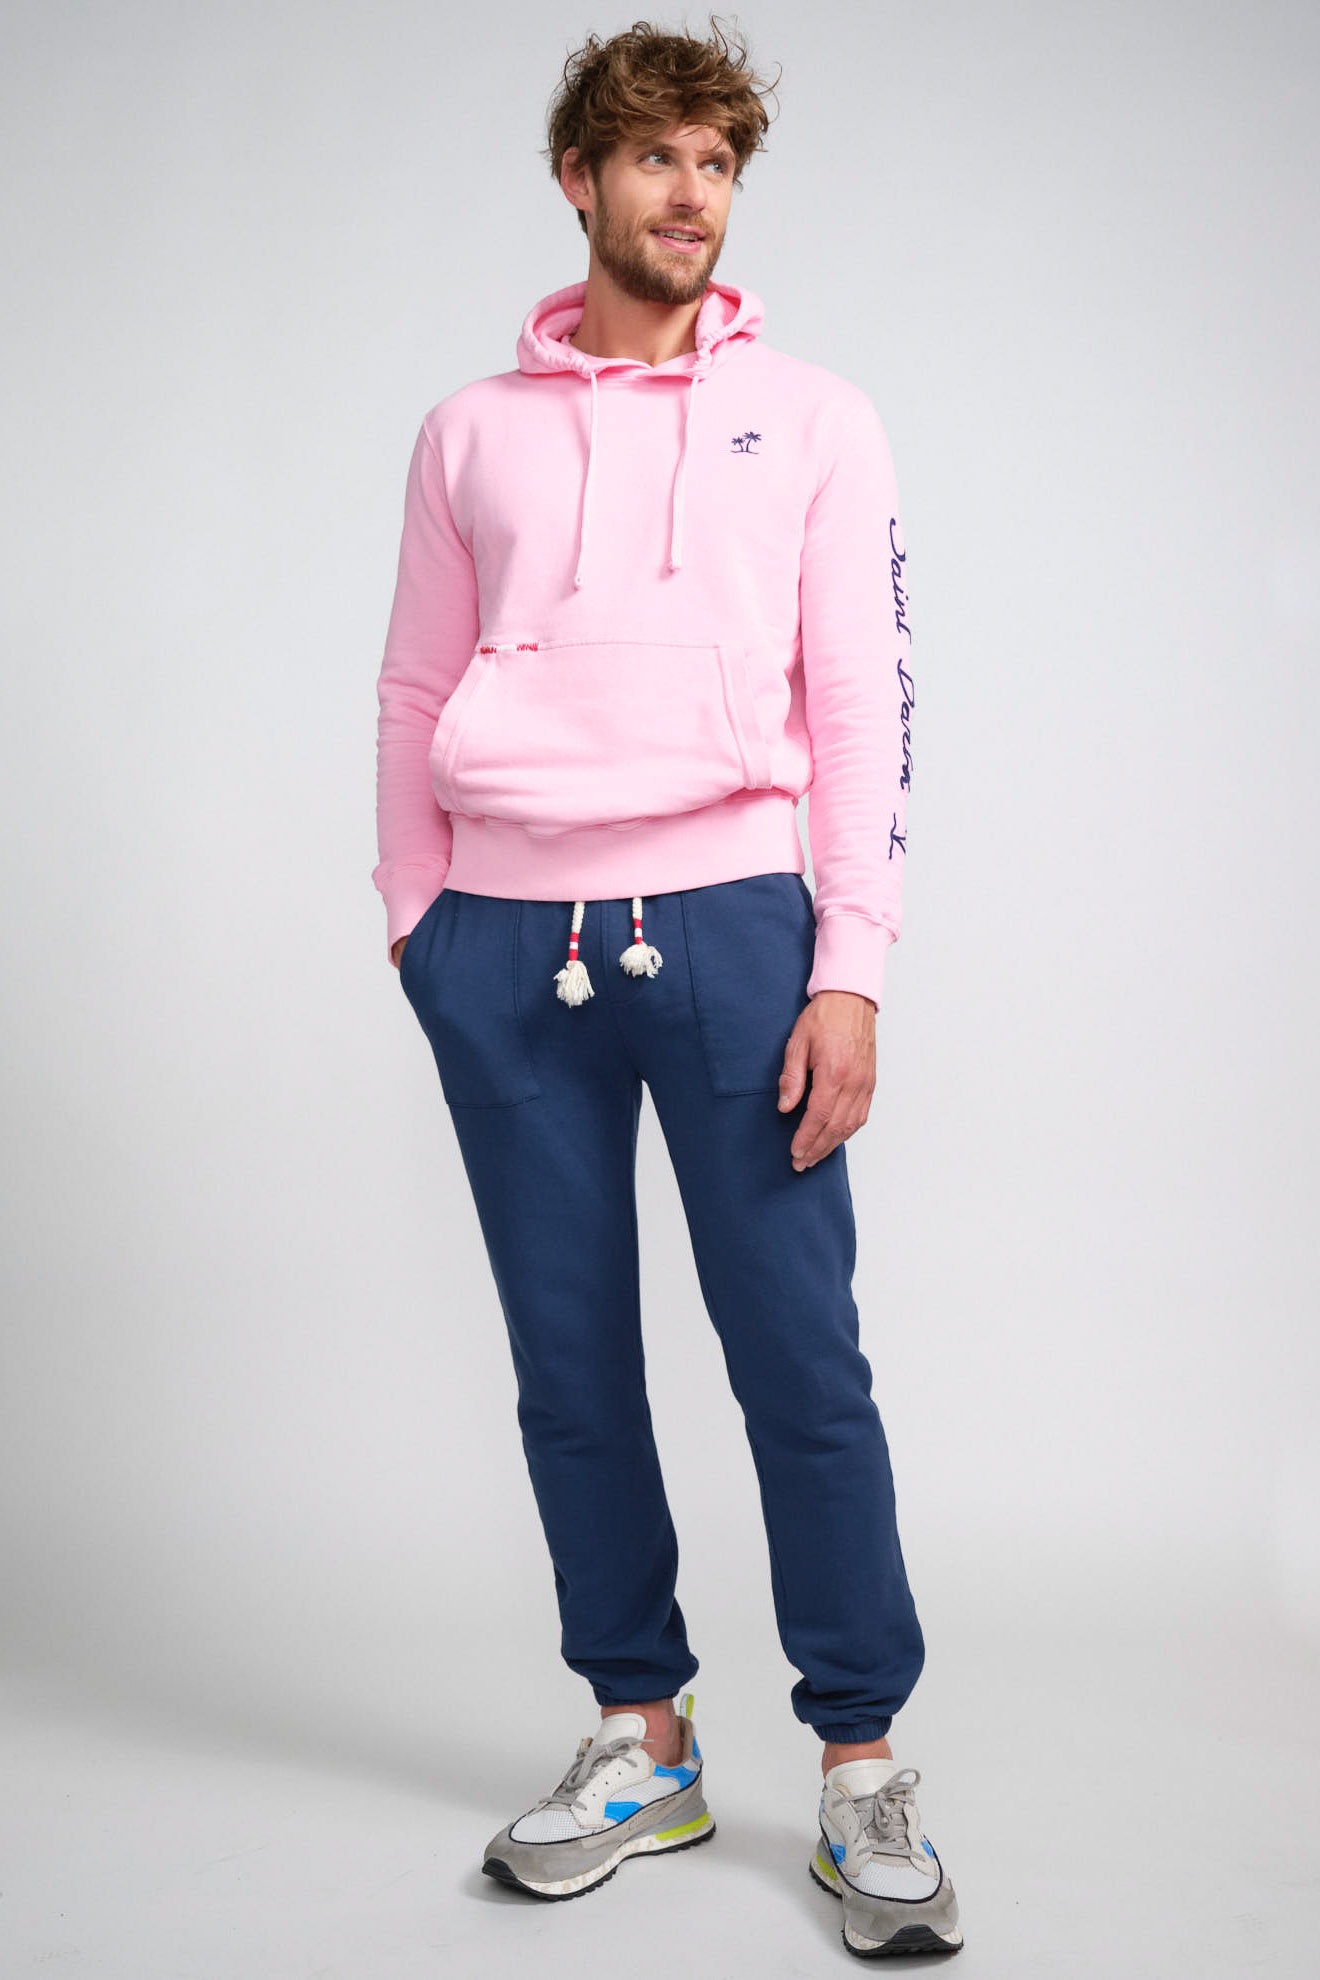 st. barth hoodie pink branded  baumwolle model styleansicht